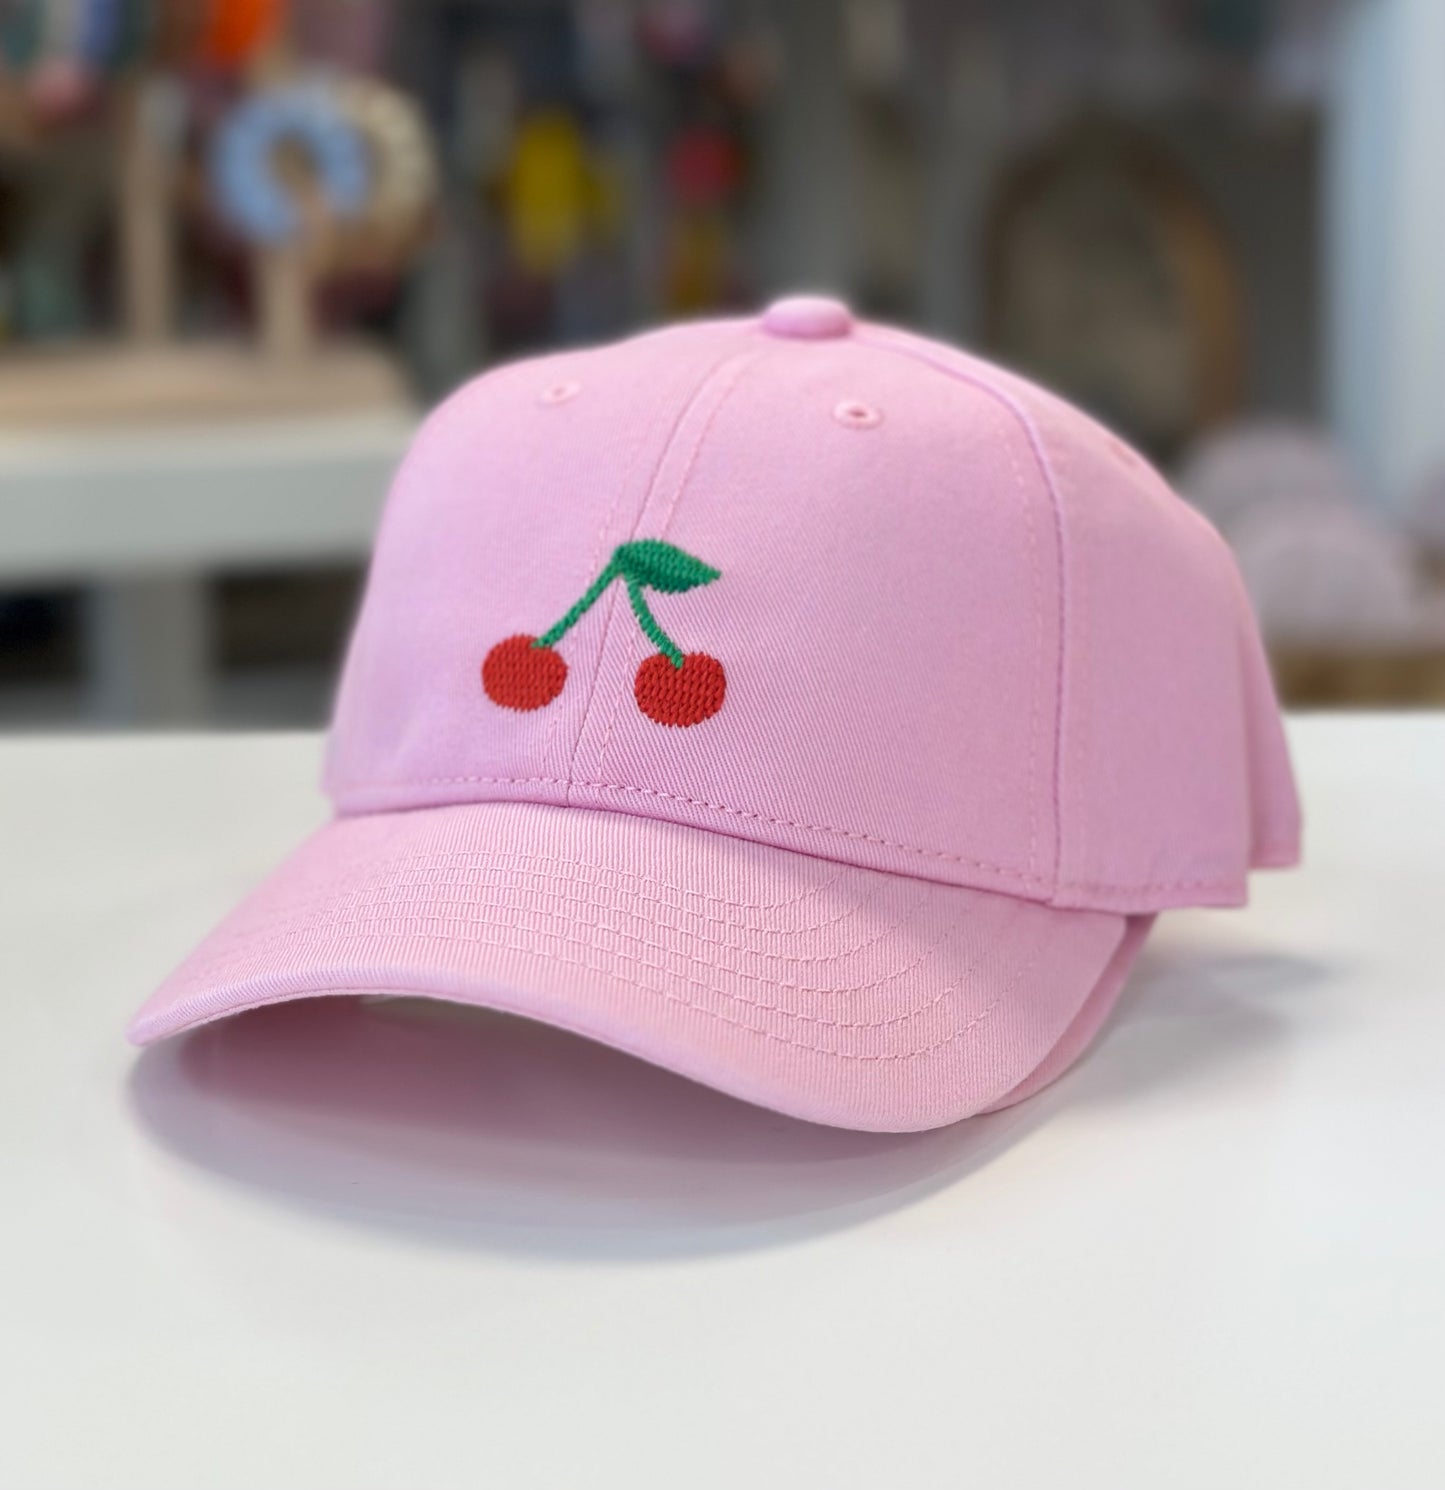 Cherries Needlepoint Baseball Cap, Light Pink